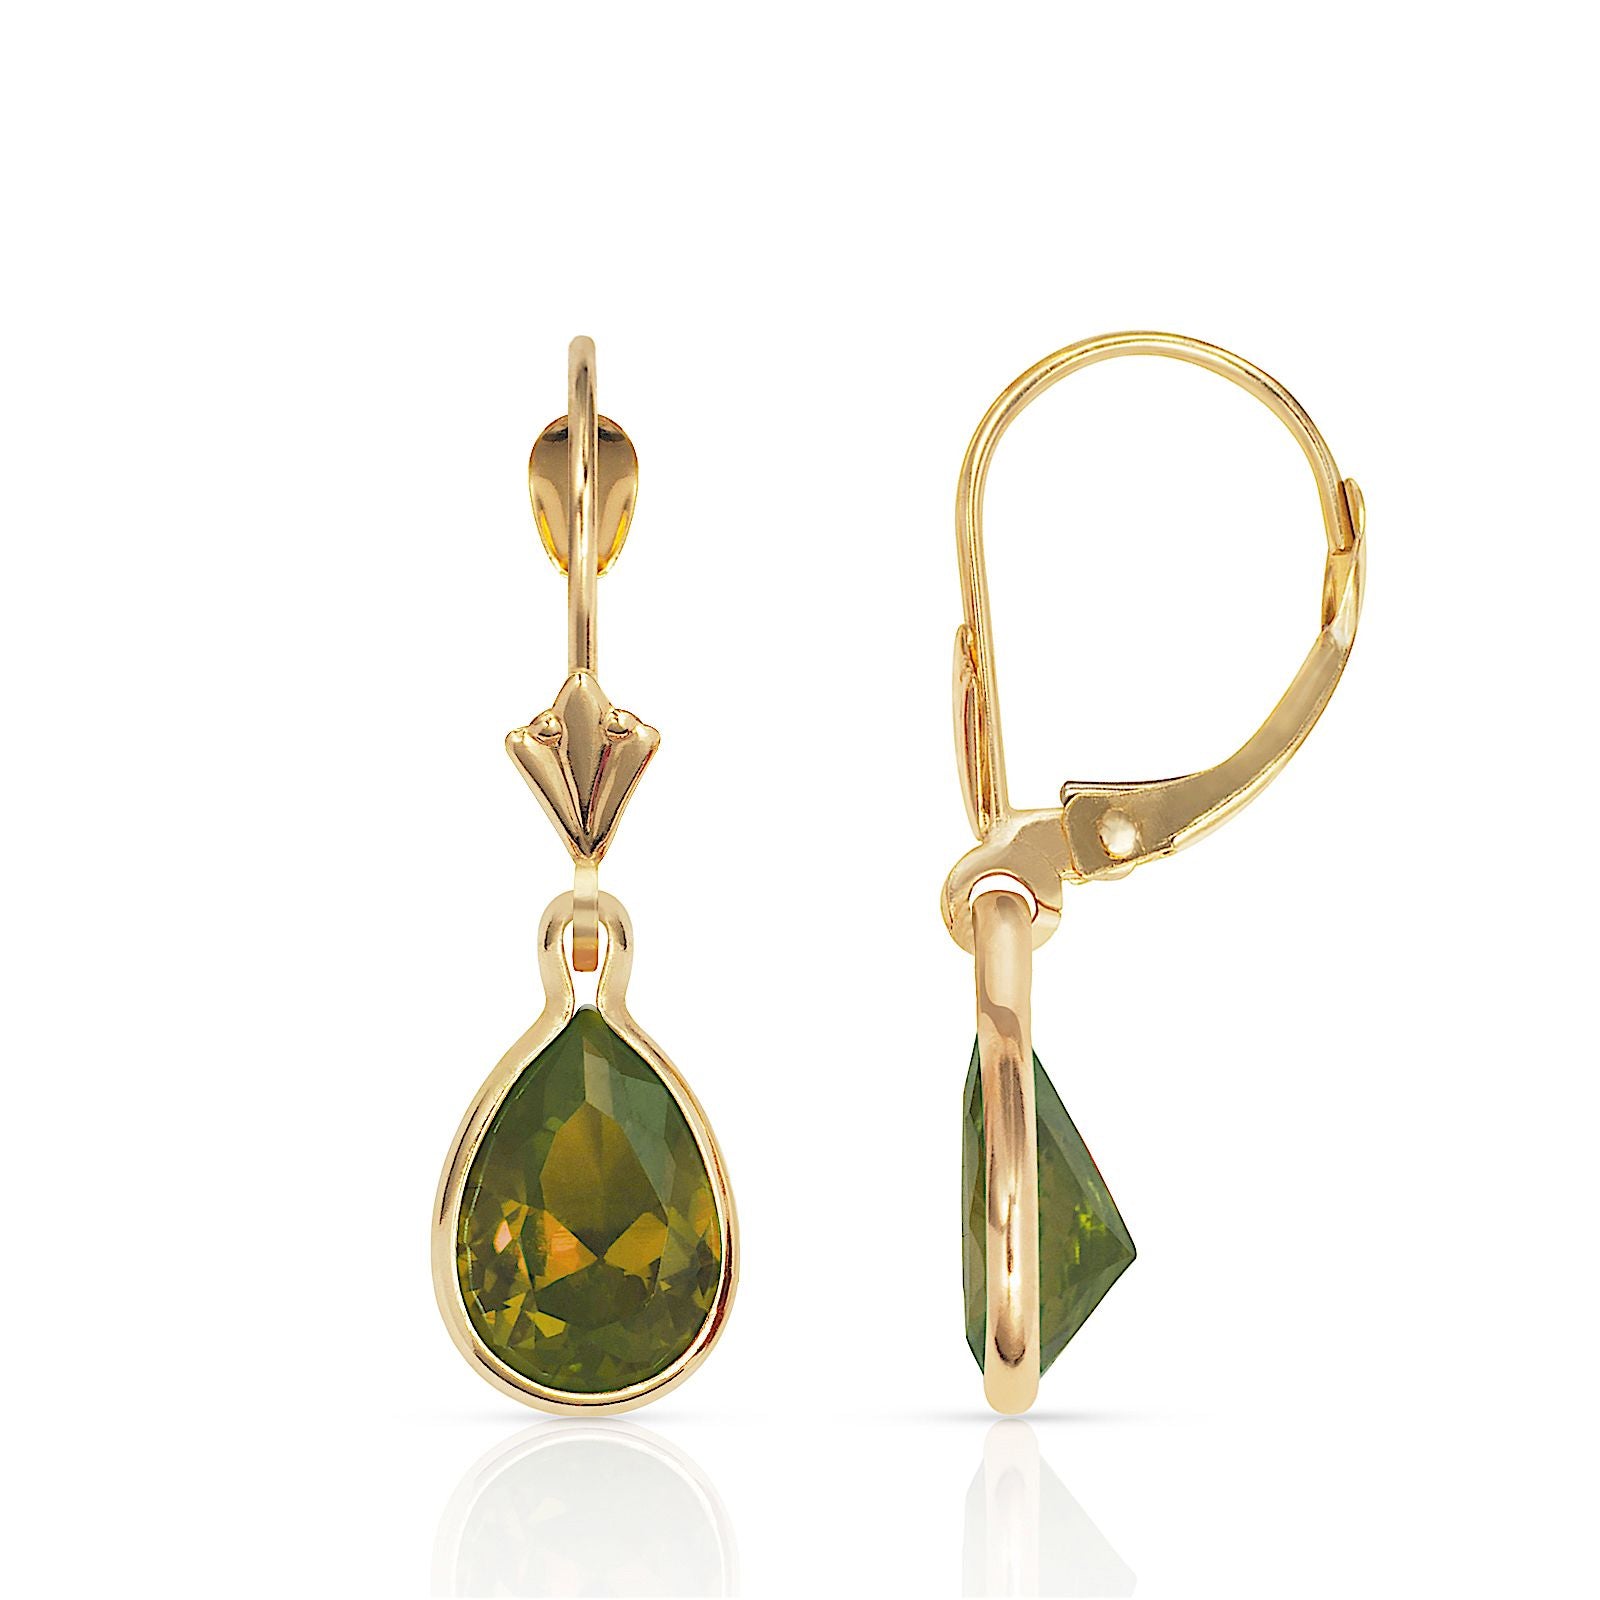 Gemstone Drop Earrings Leverback 14K Gold - BEYOND